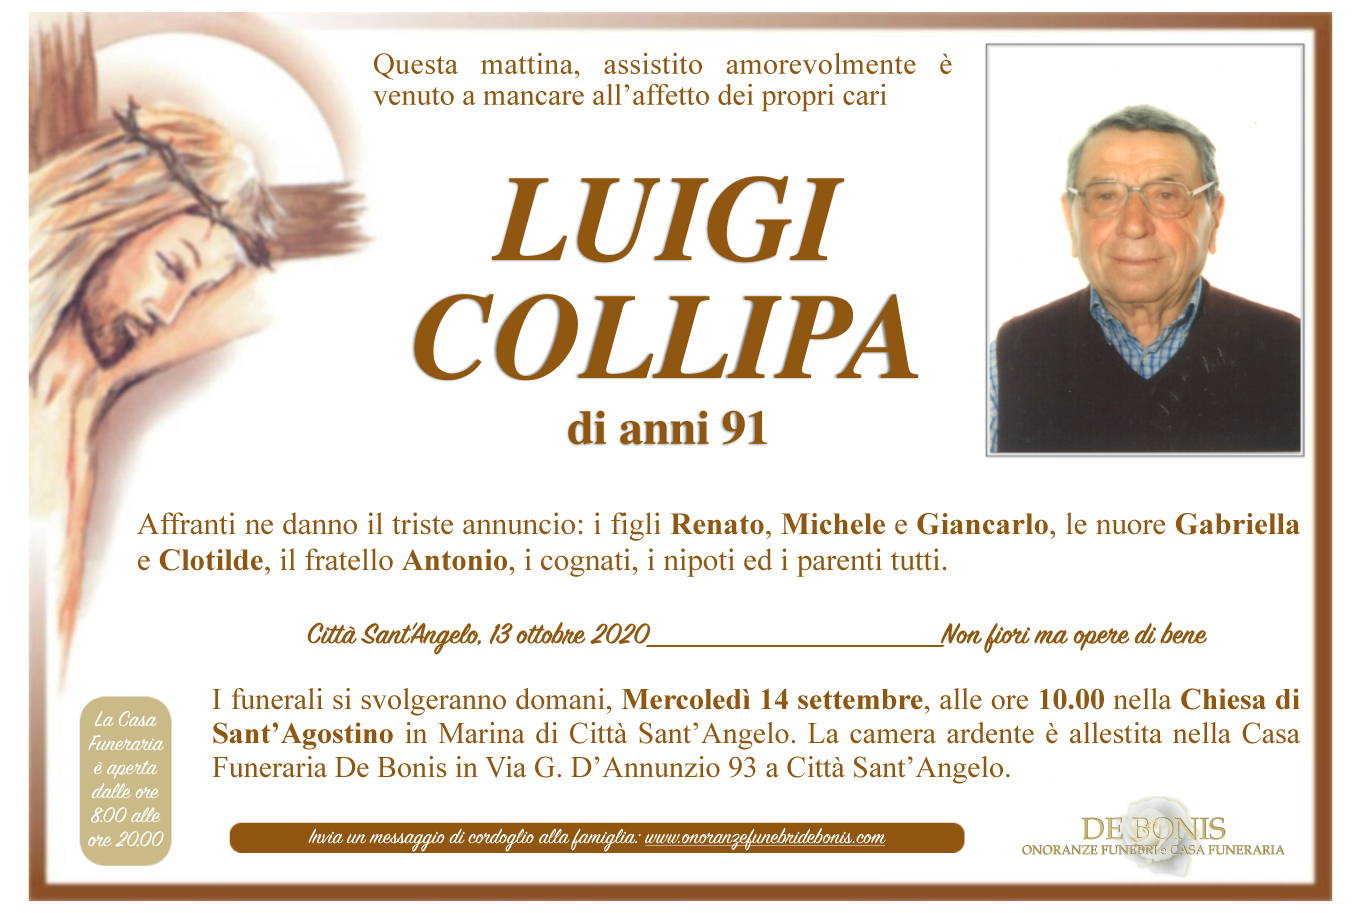 Luigi Collipa